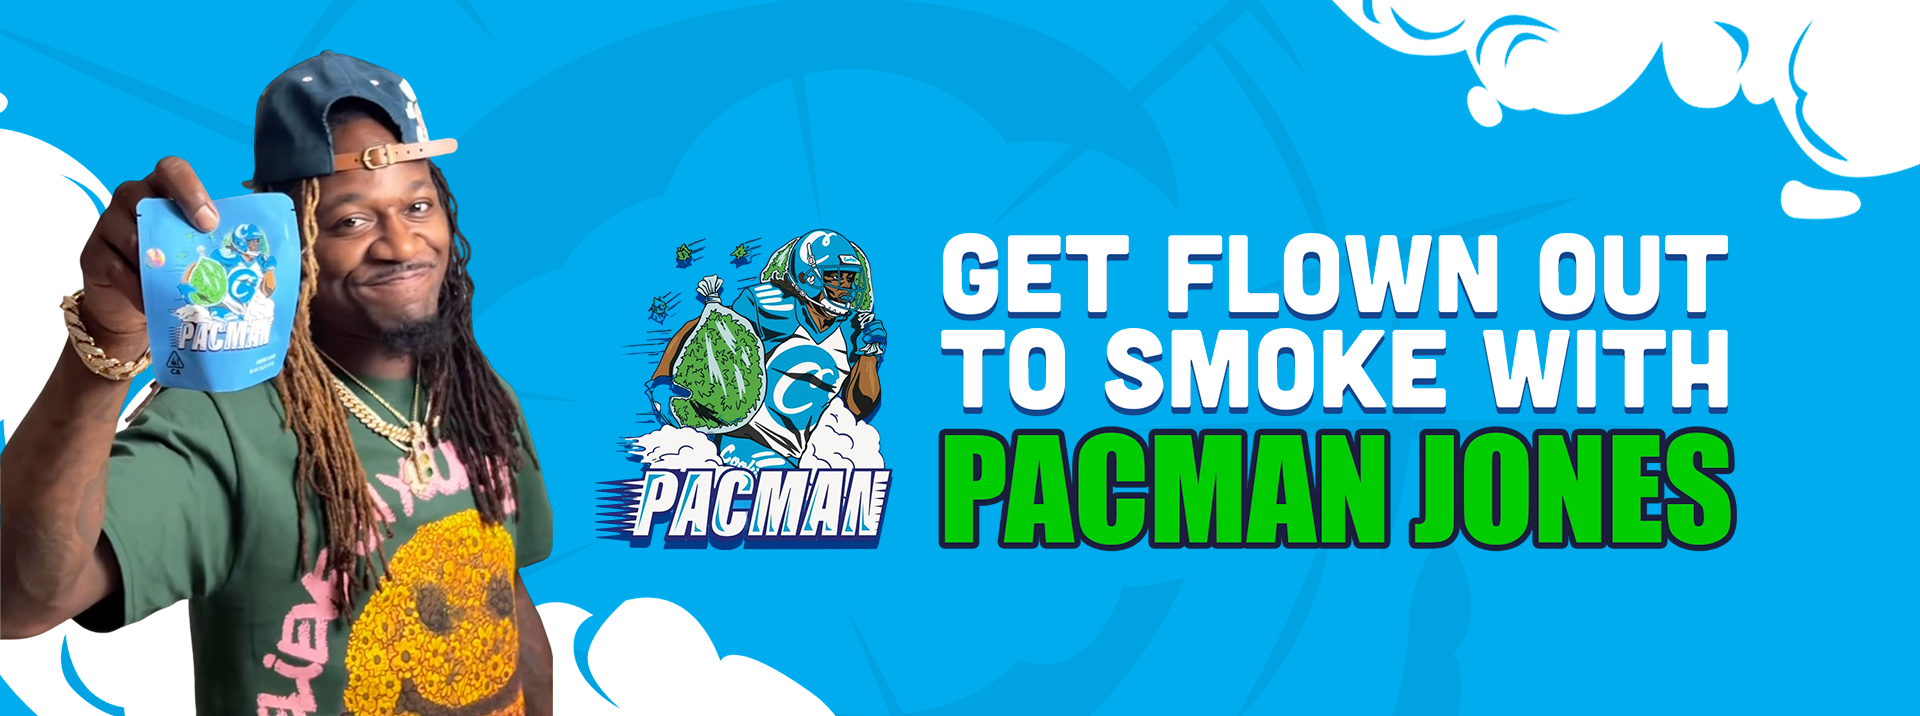 pacman banner